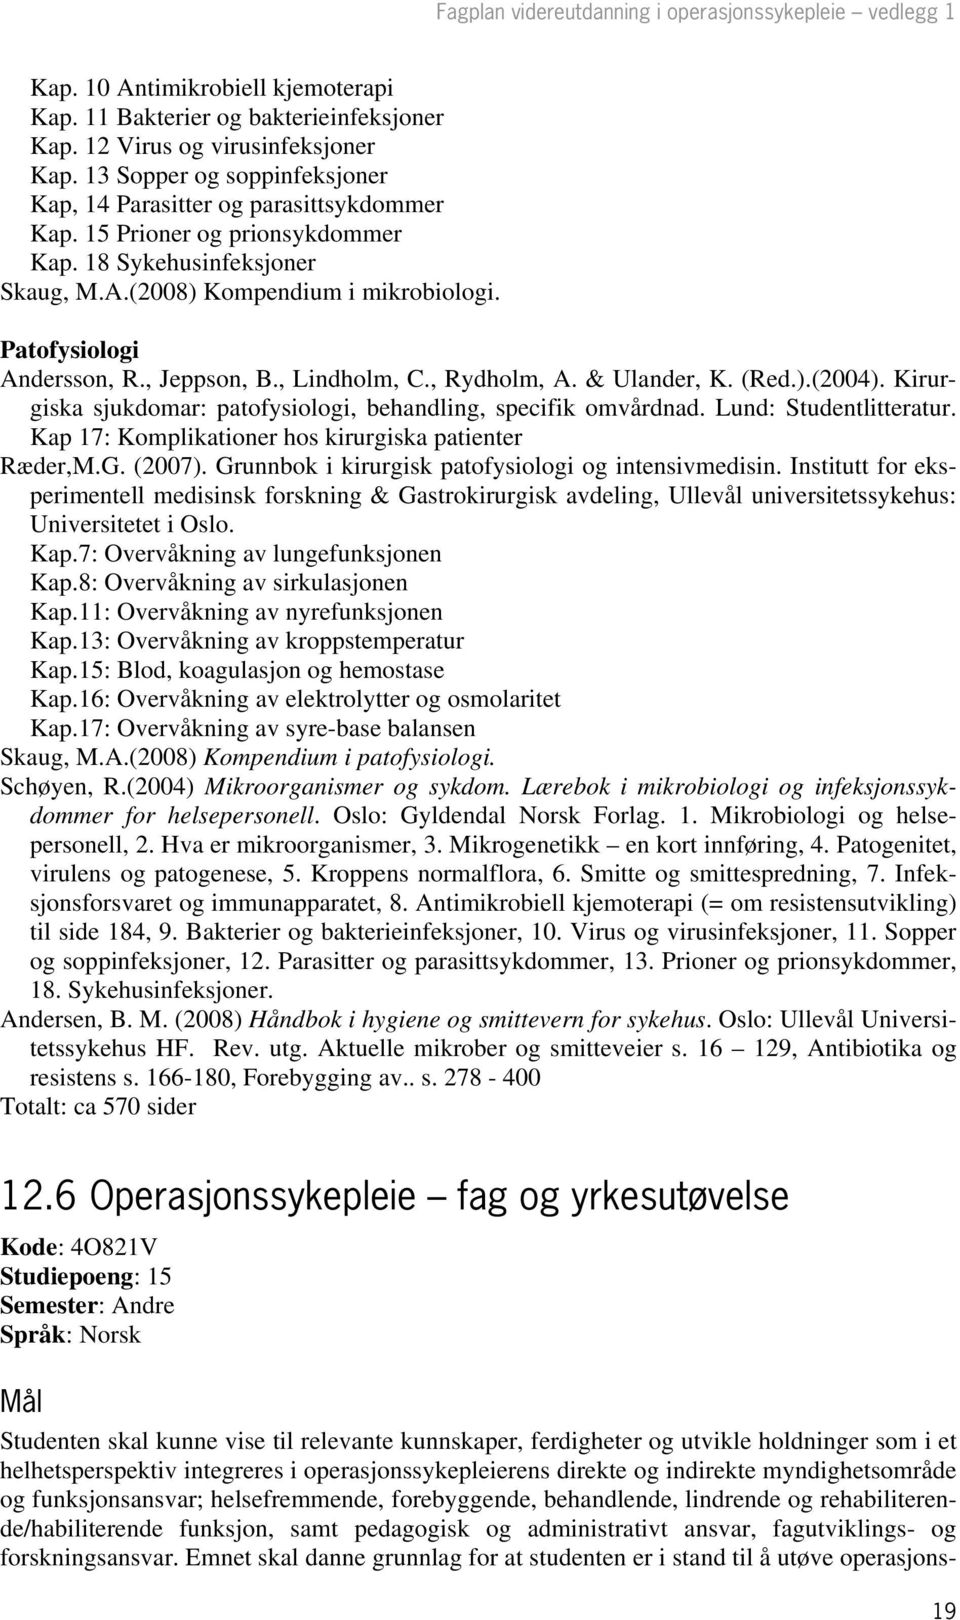 Patofysiologi Andersson, R., Jeppson, B., Lindholm, C., Rydholm, A. & Ulander, K. (Red.).(2004). Kirurgiska sjukdomar: patofysiologi, behandling, specifik omvårdnad. Lund: Studentlitteratur.